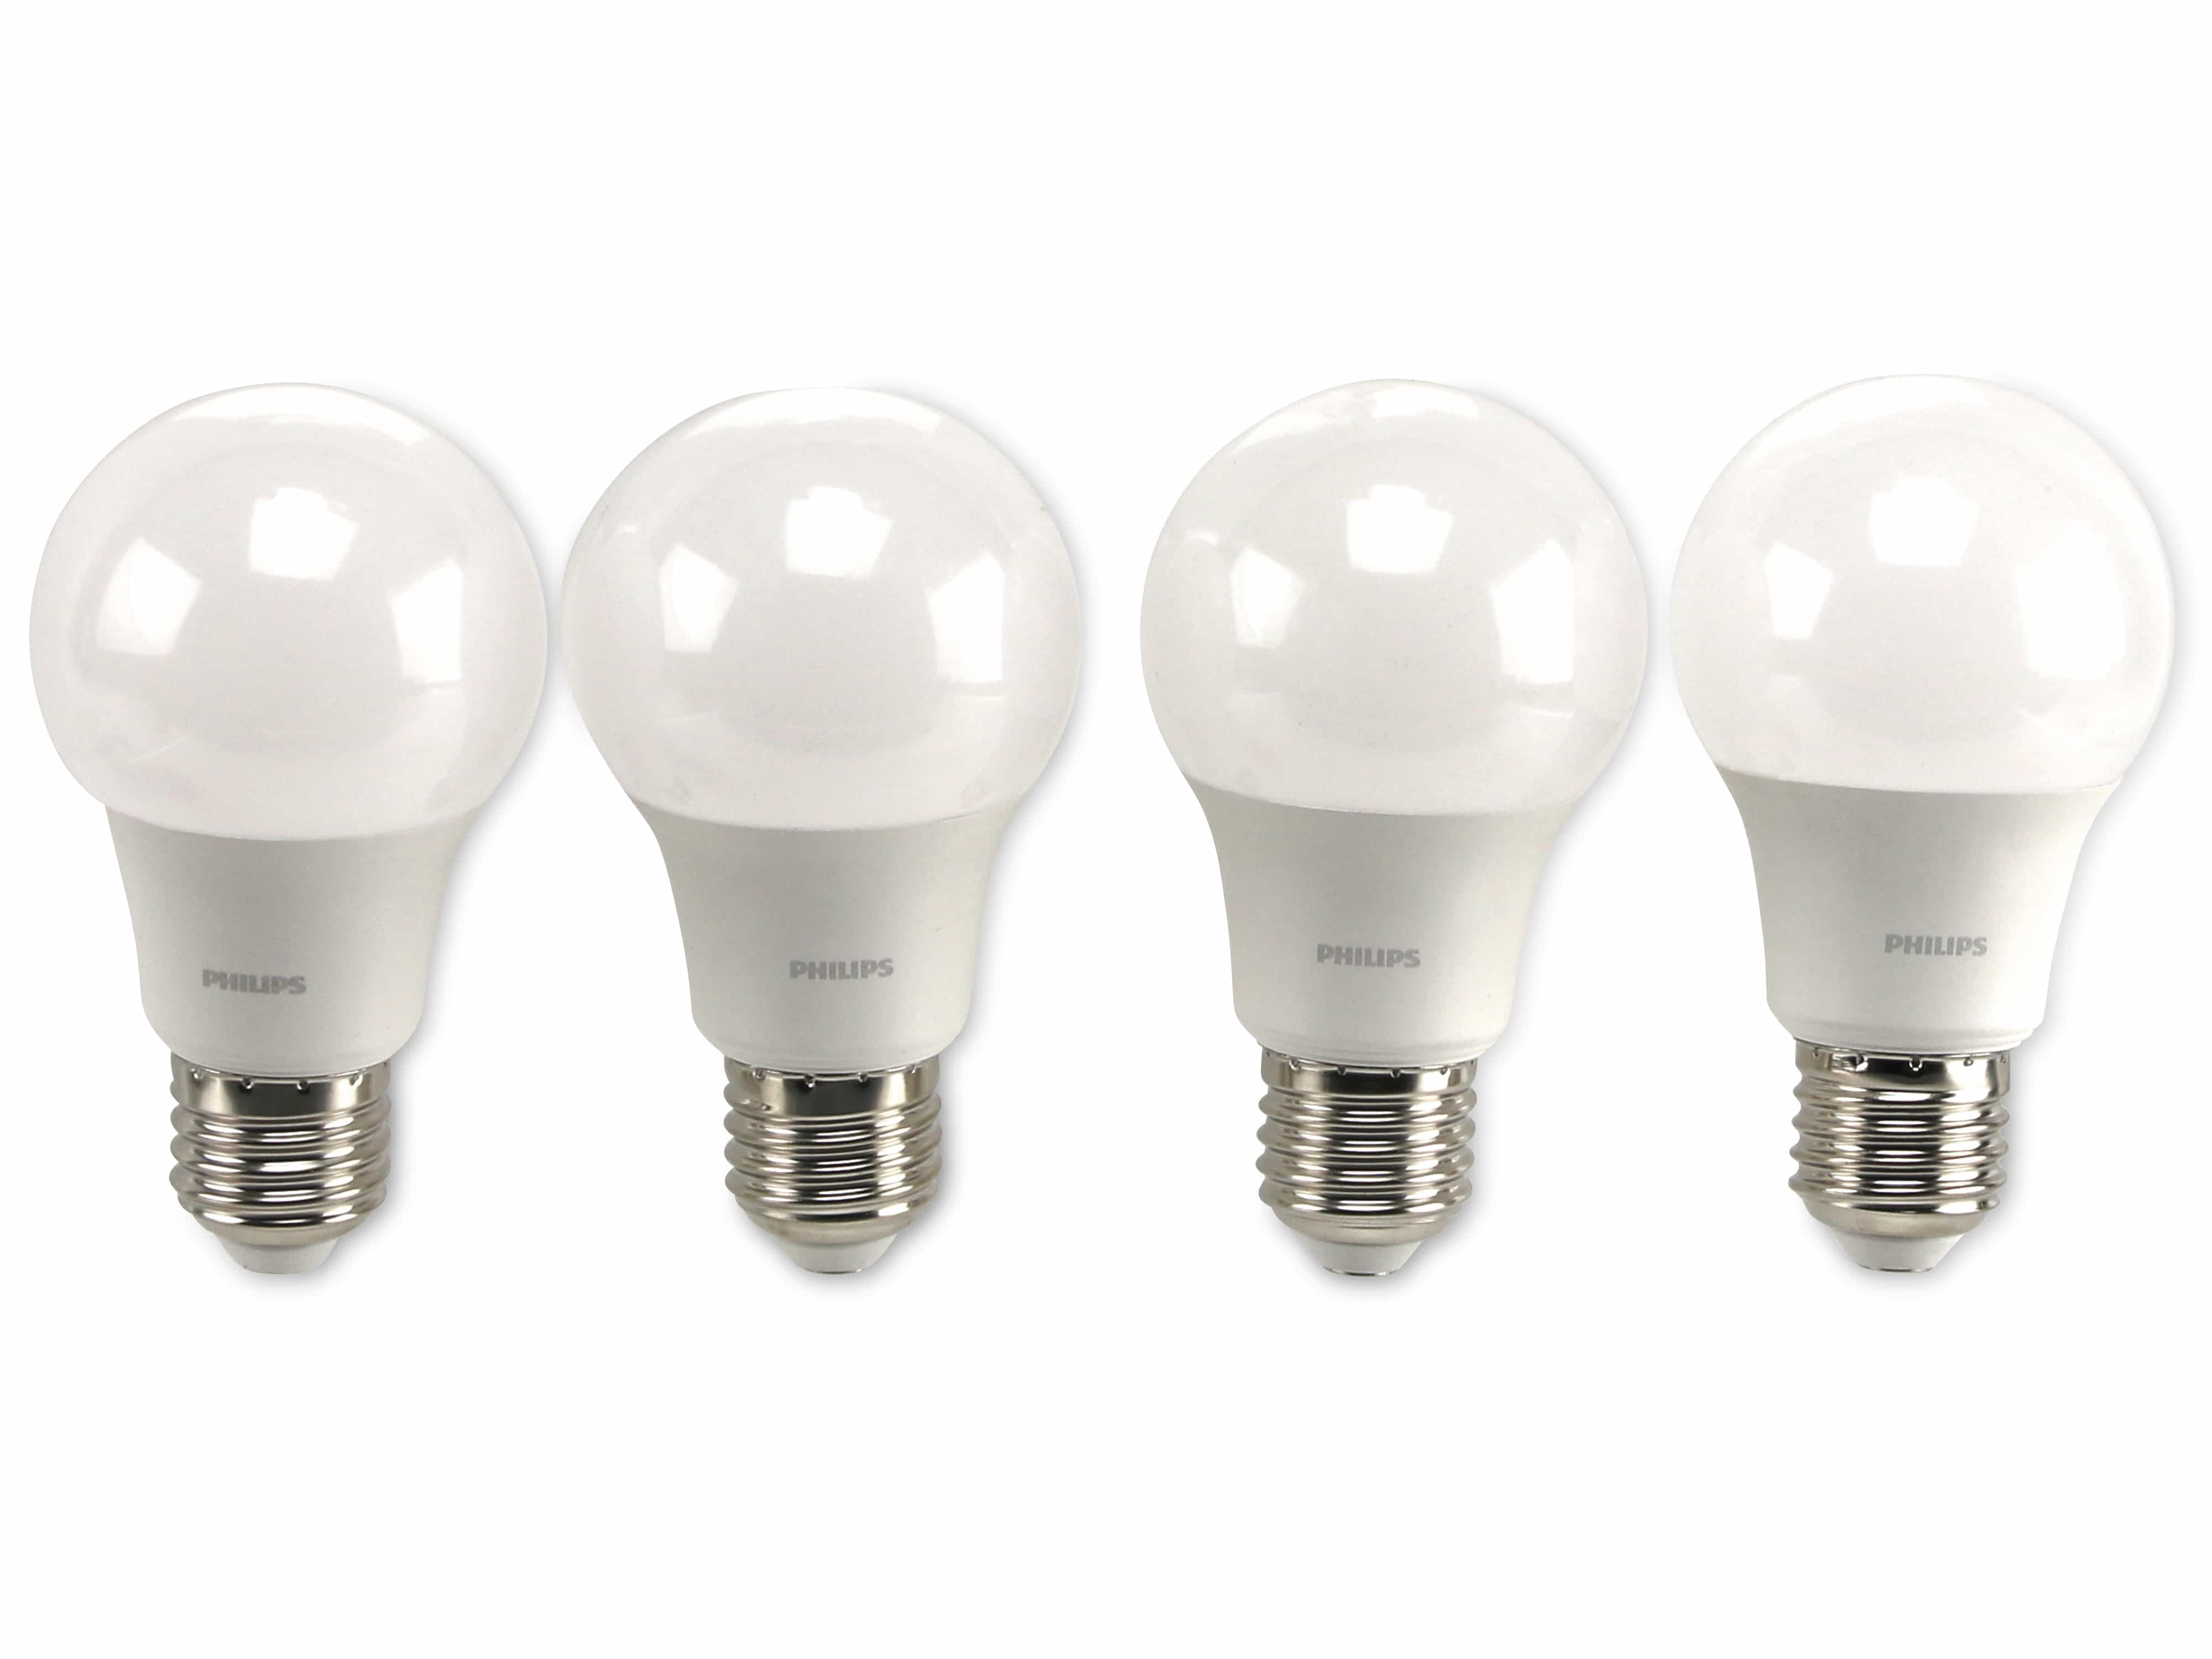 LED-Lampe Philips, E27, EEK: F, 8 W, warmweiß, 806 lm, 4 Stück